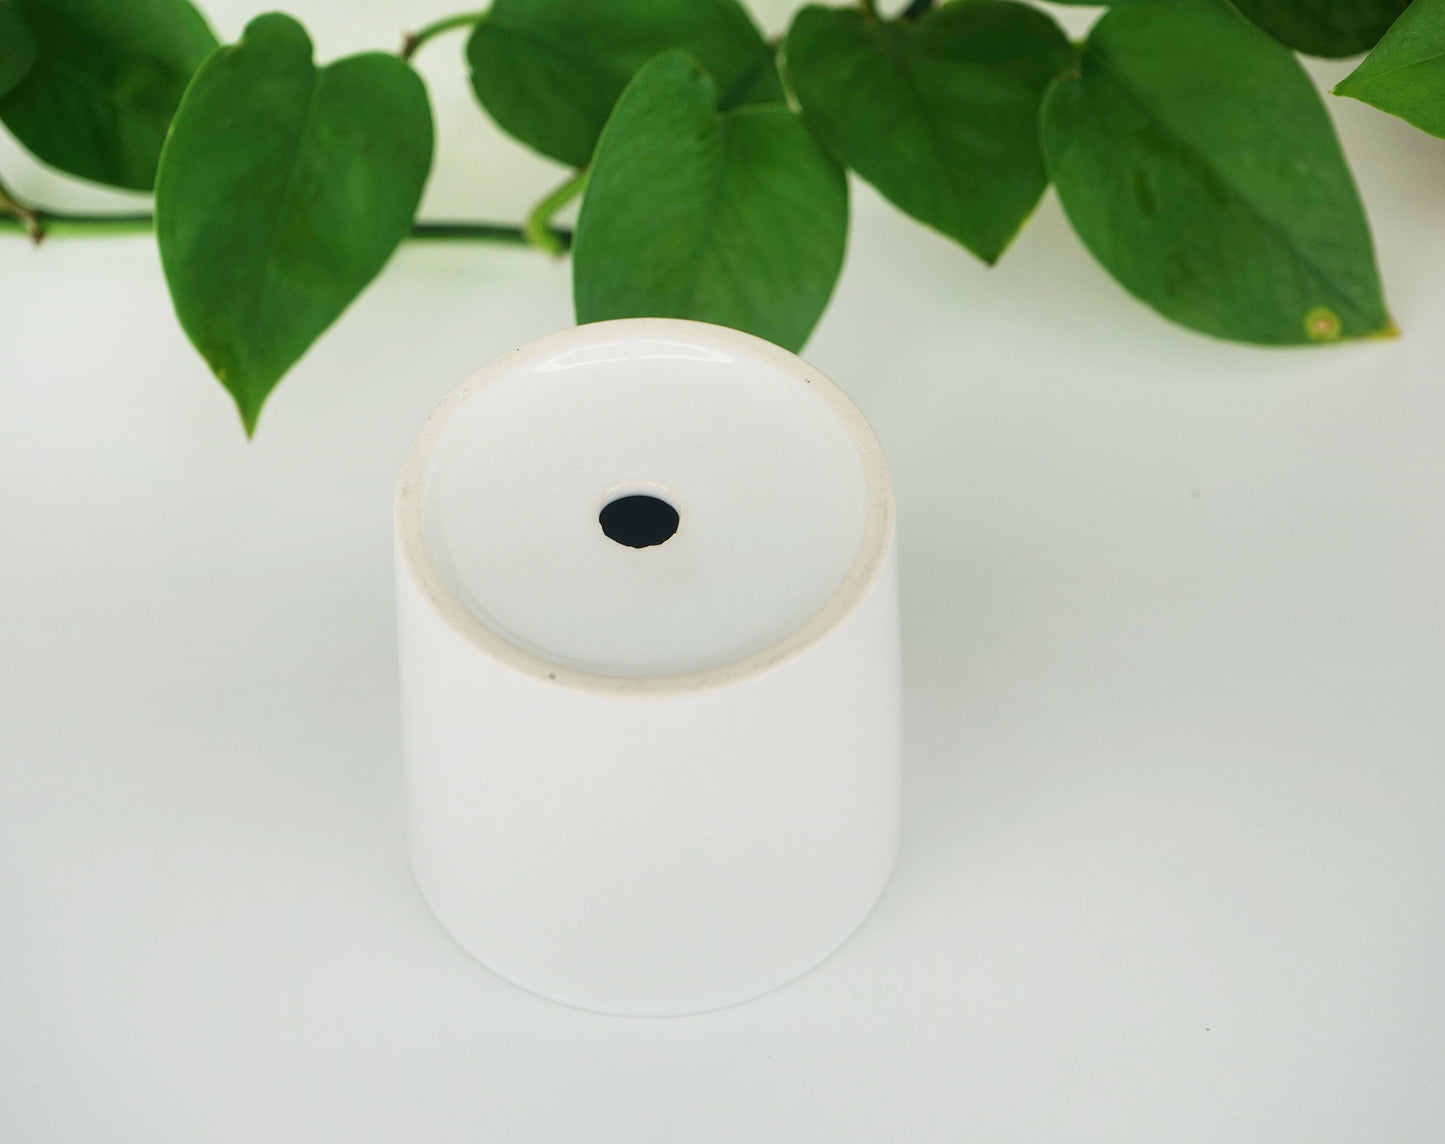 Personalized Planter Engagement Gift - 3" White Ceramic Pot w/ Bamboo Tray - Custom Succulent Pot - Newly Engaged - Future Mr. & Mrs.